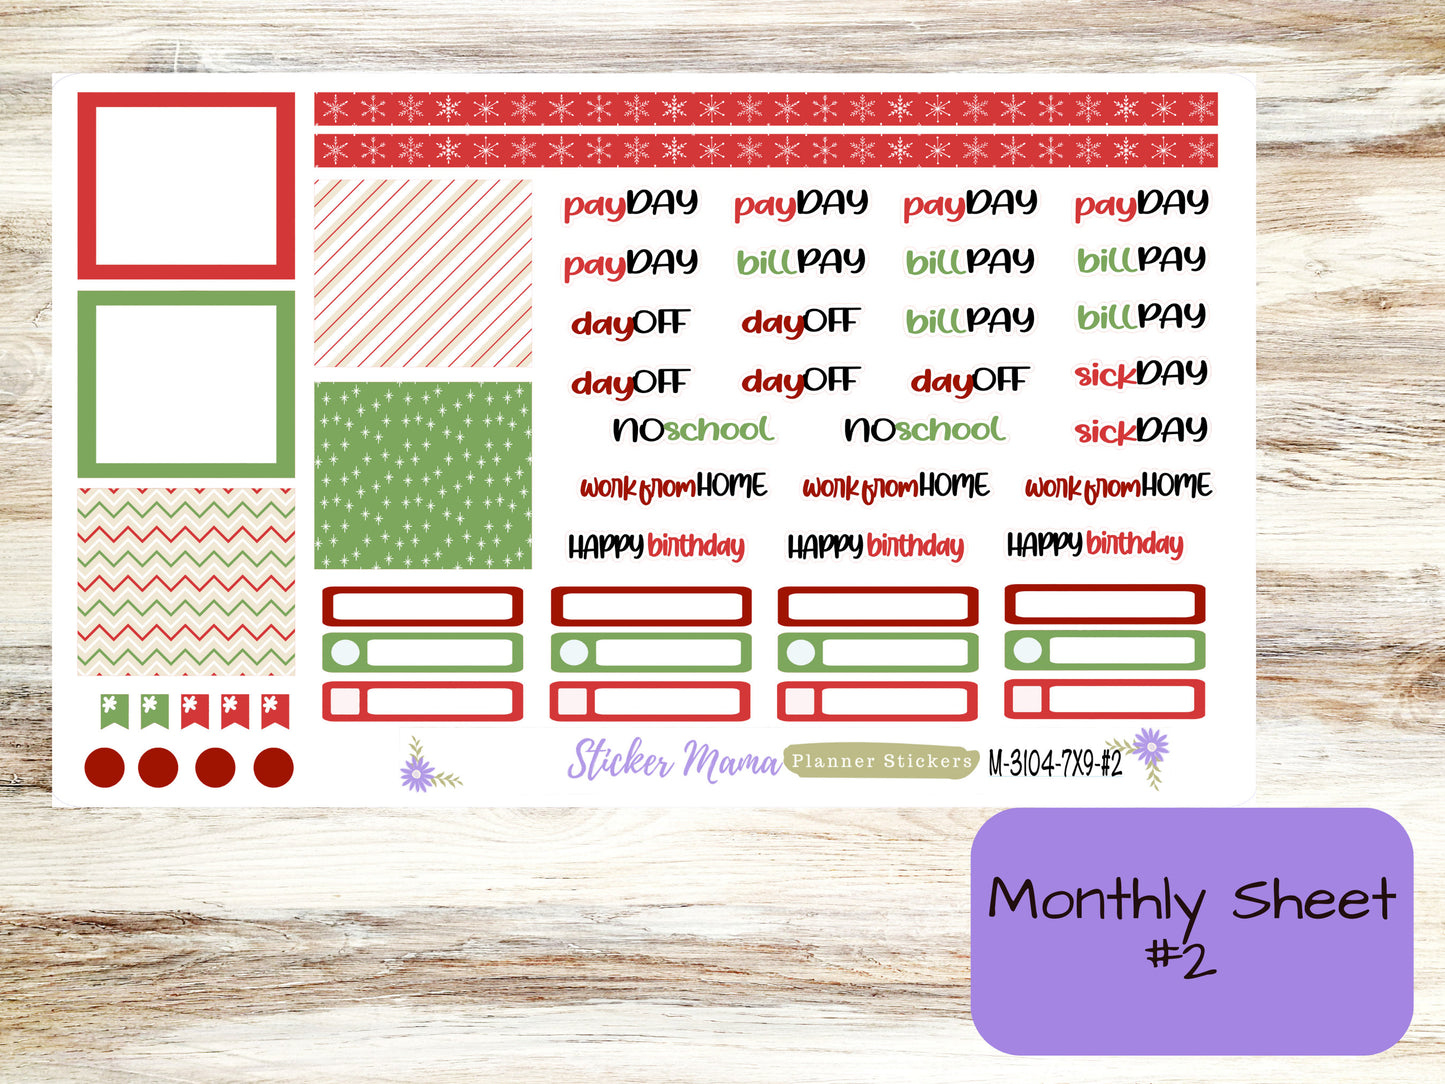 MONTHLY KIT-3104 || 7X9 || Santa's Here - 7x9 ec December Monthly Kit - December Monthly Planner Kits -  Monthly Pages